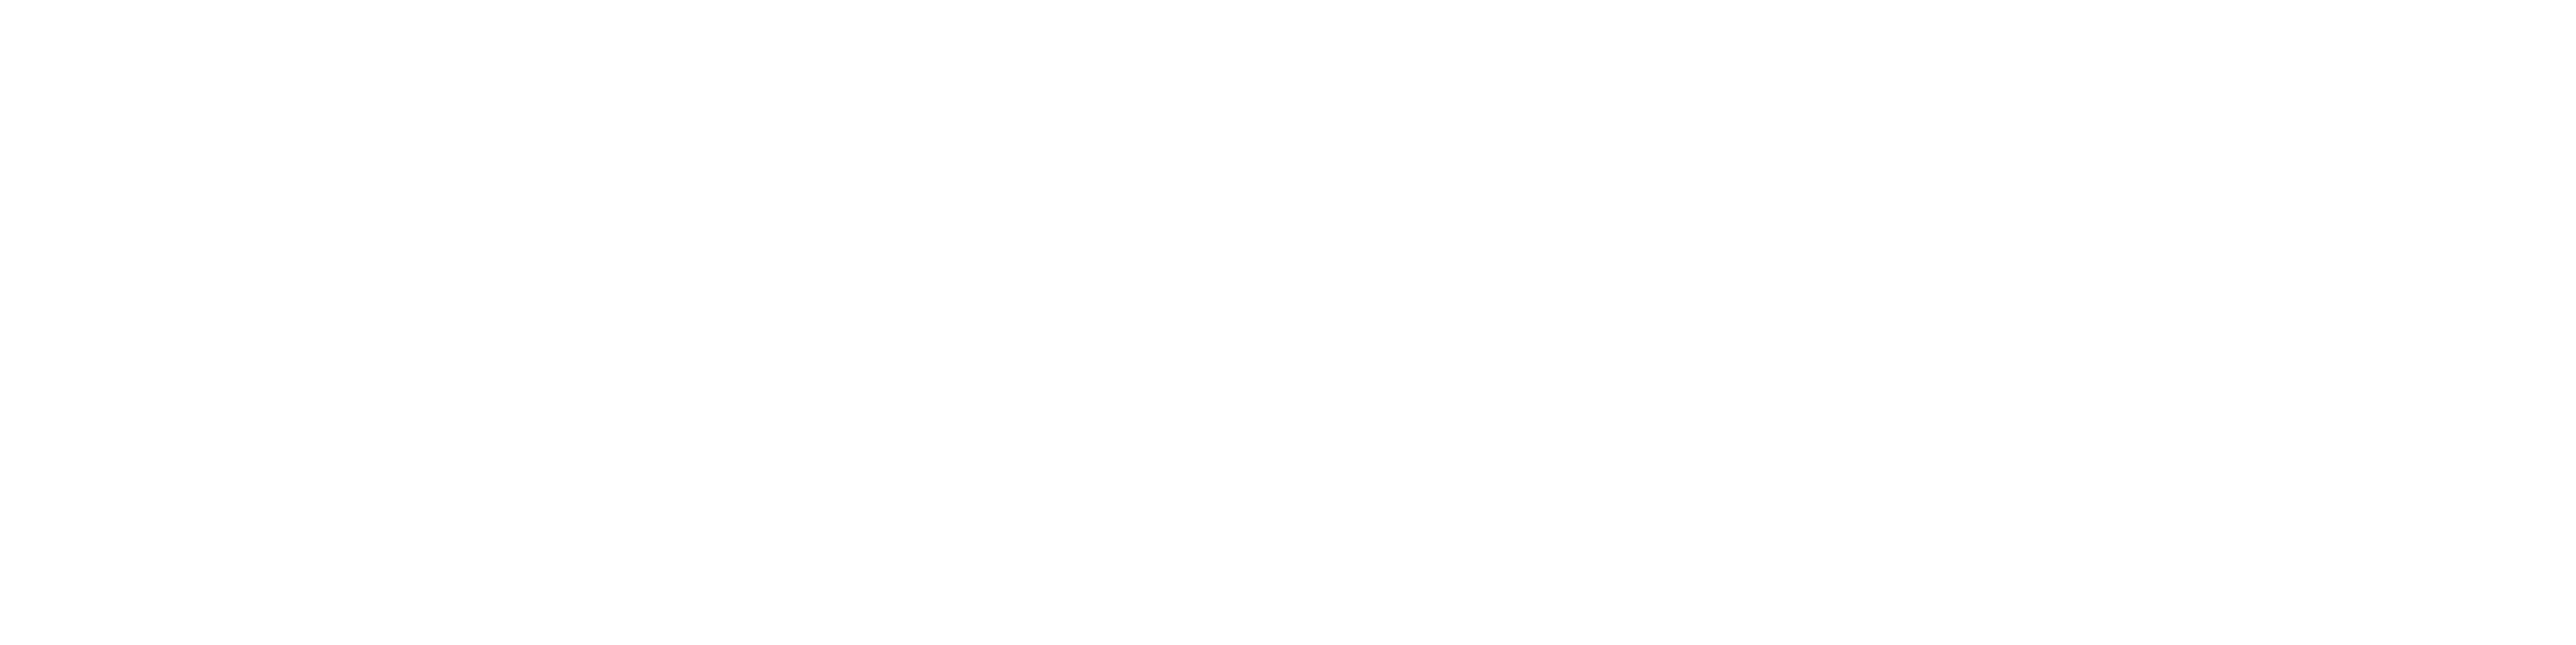 Creation-Site-Dropshipping.com